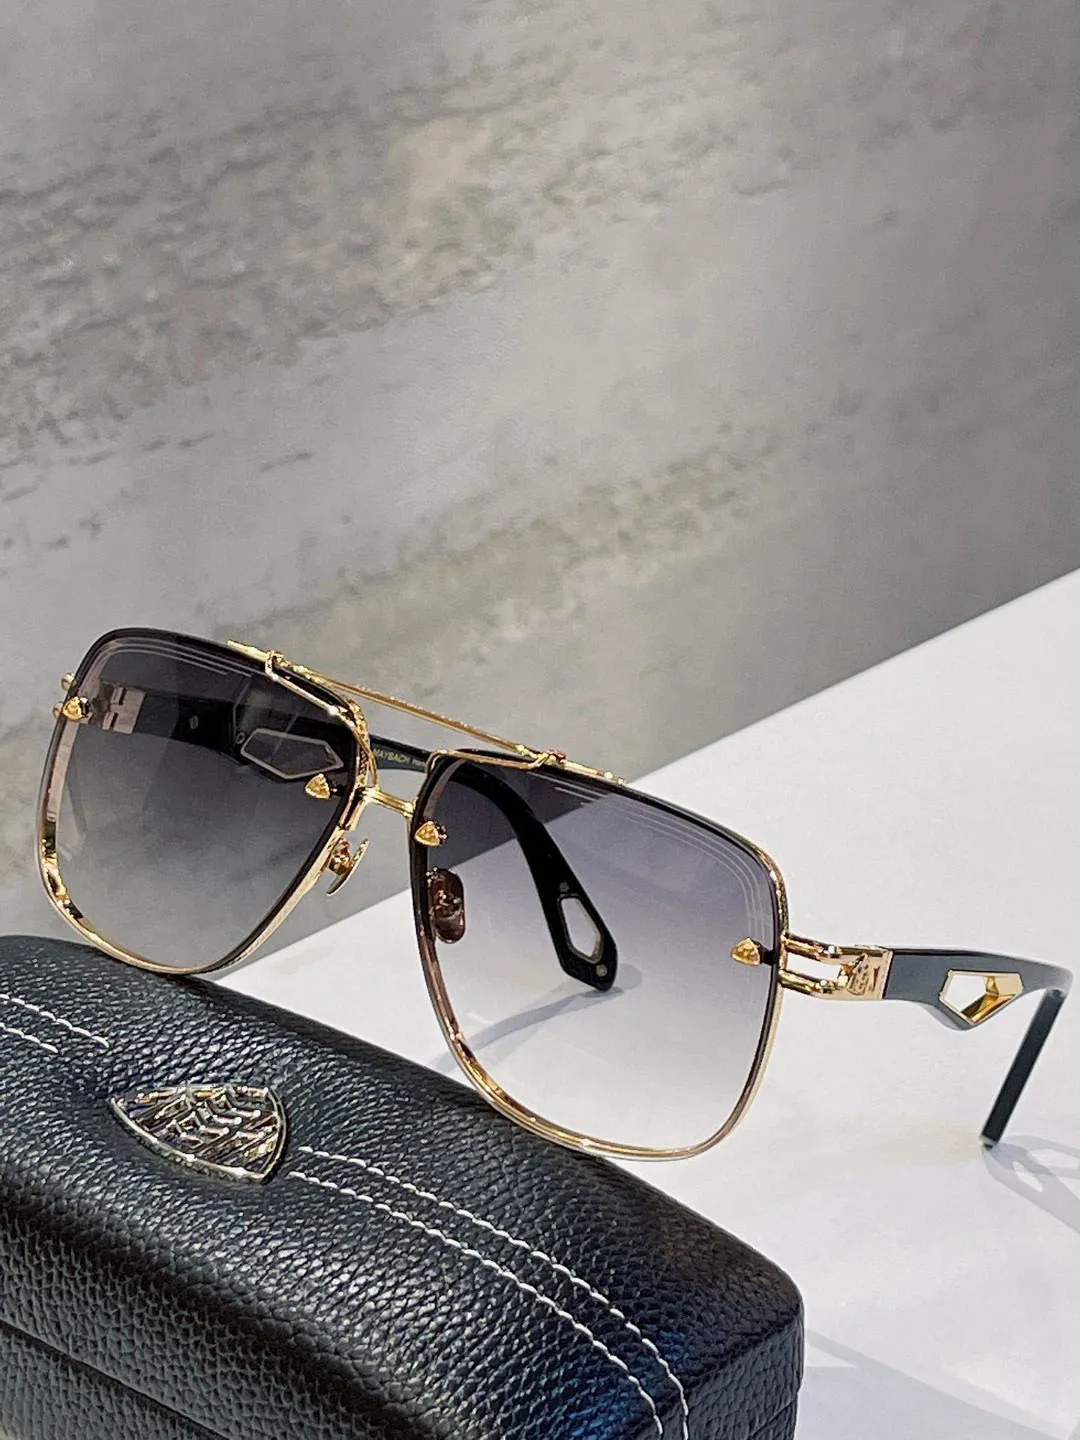 Mayba King II Top Original High Quality Designer Solglasögon för män Famous Fashionable Classic Retro Luxury Brand Eyeglass Fashion 245h